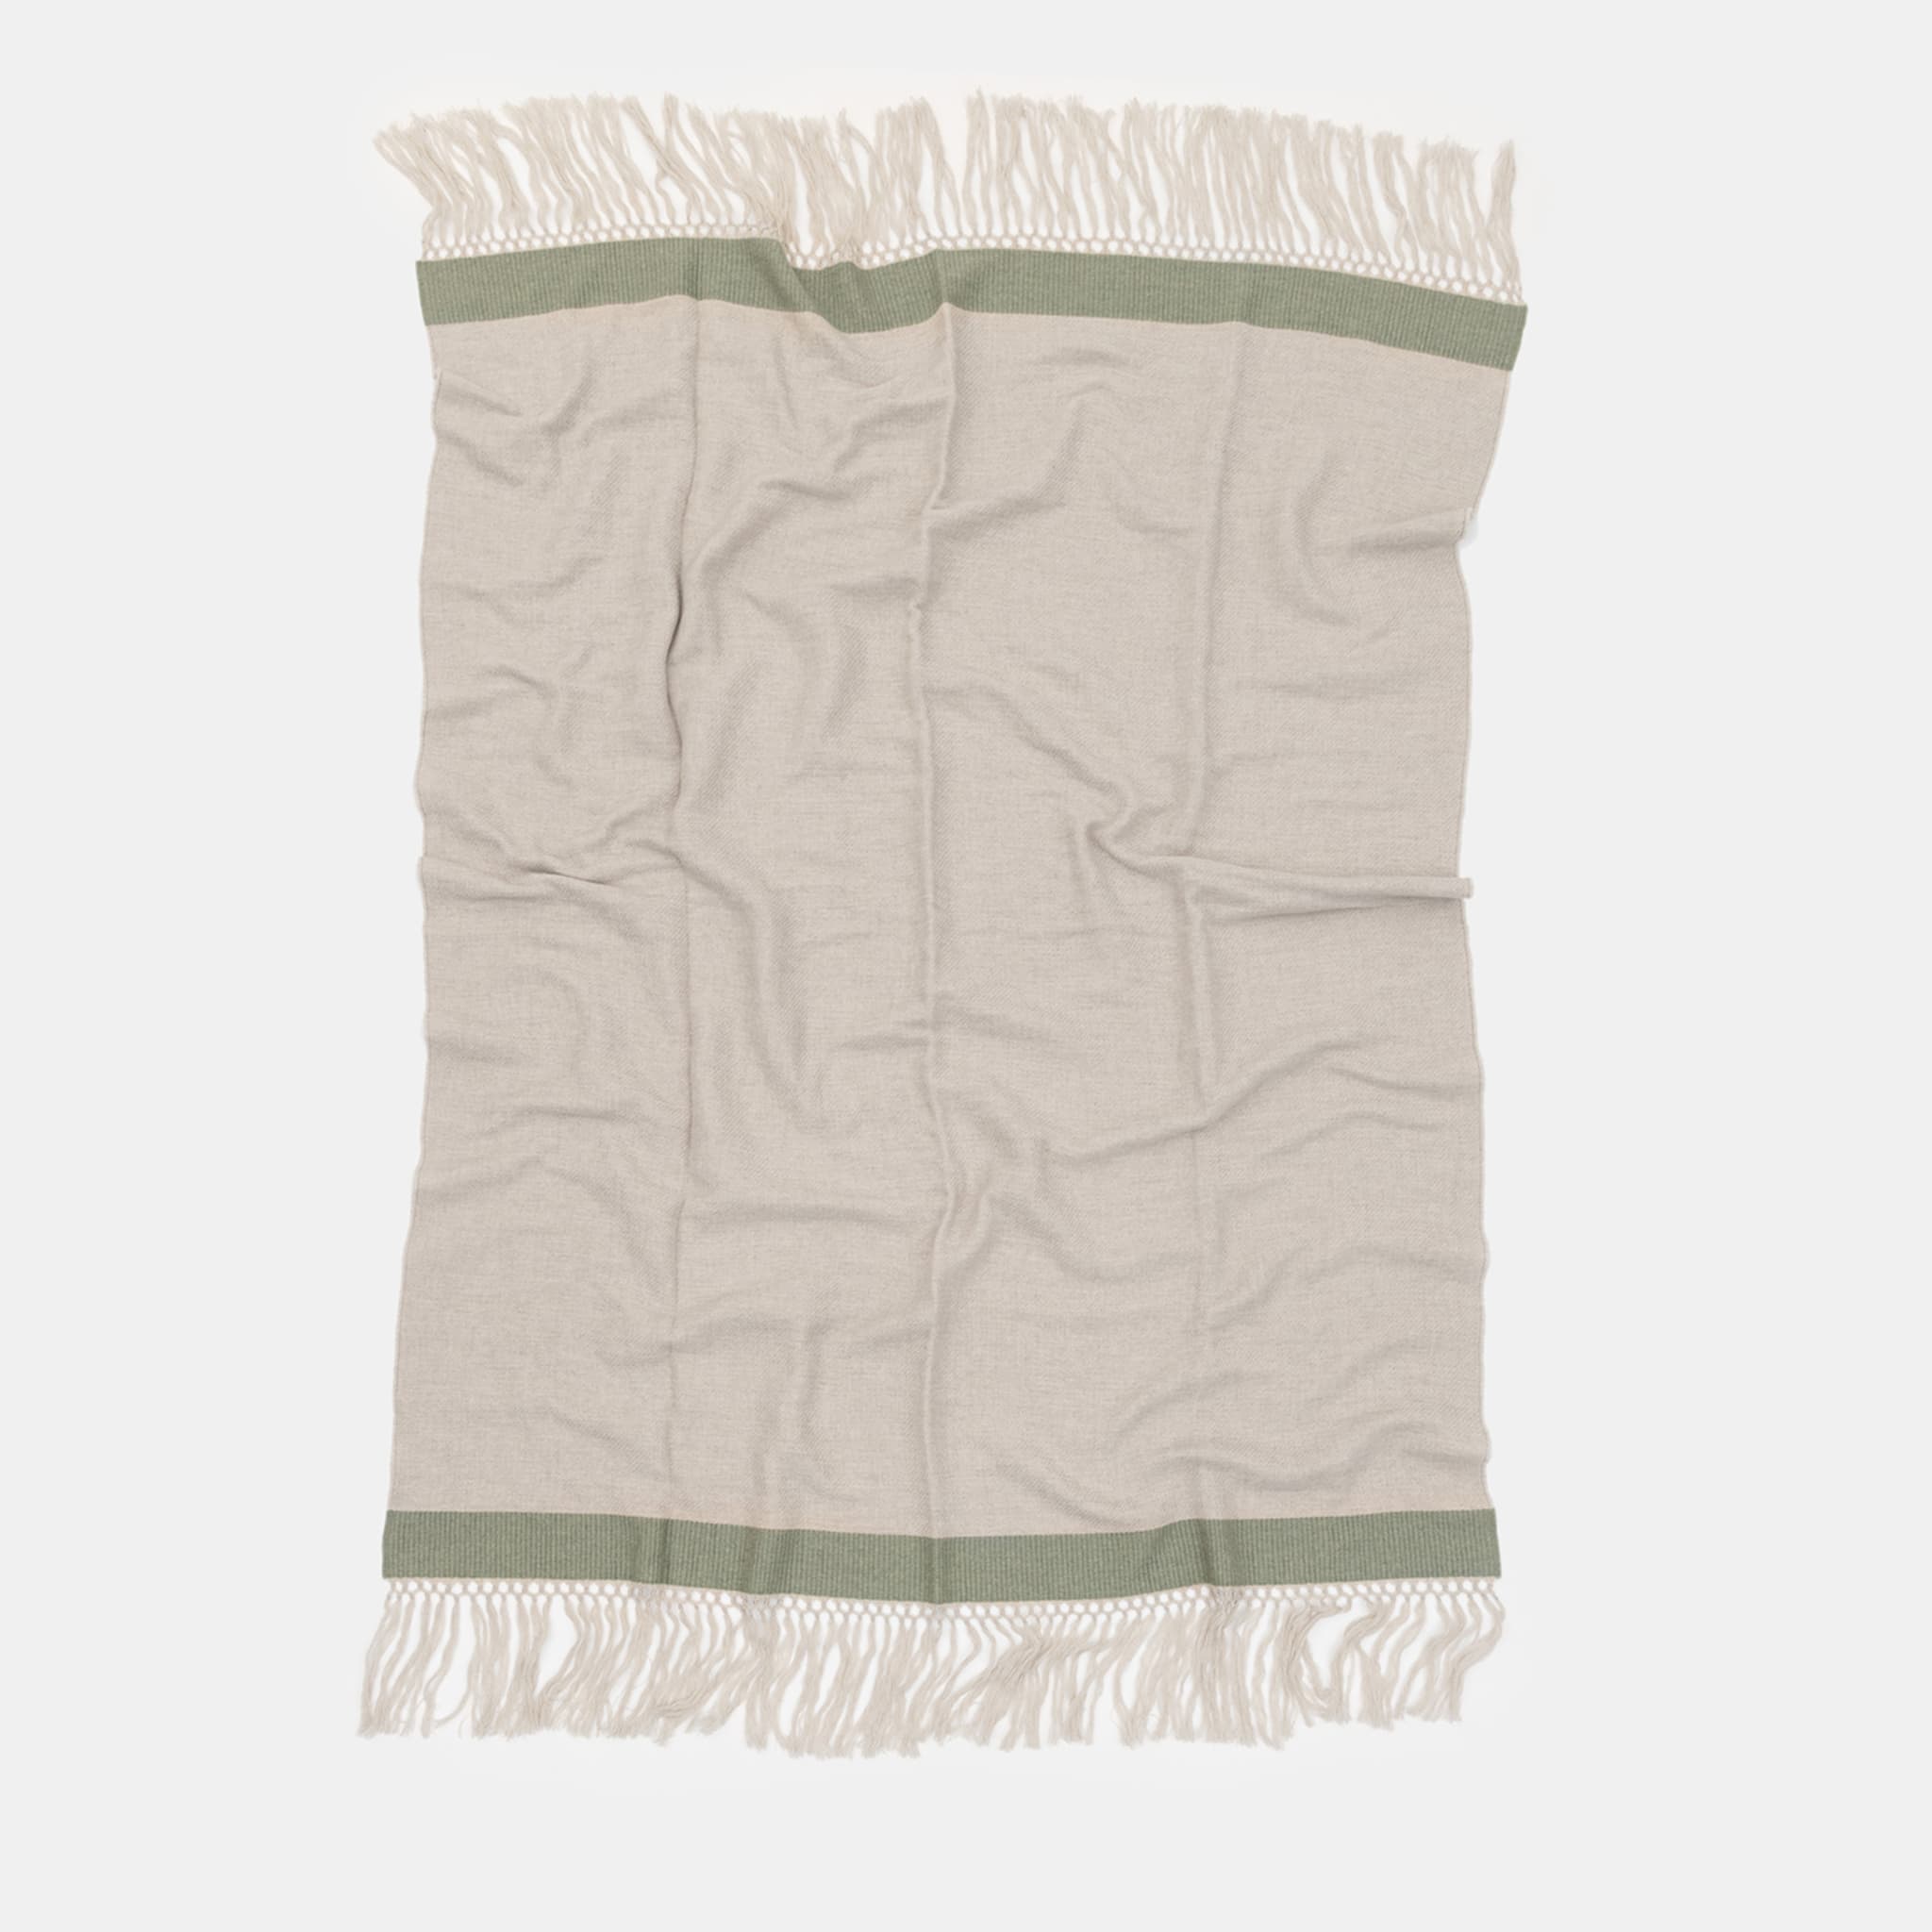 Fringed Green-Banded Blanket - Alternative view 1